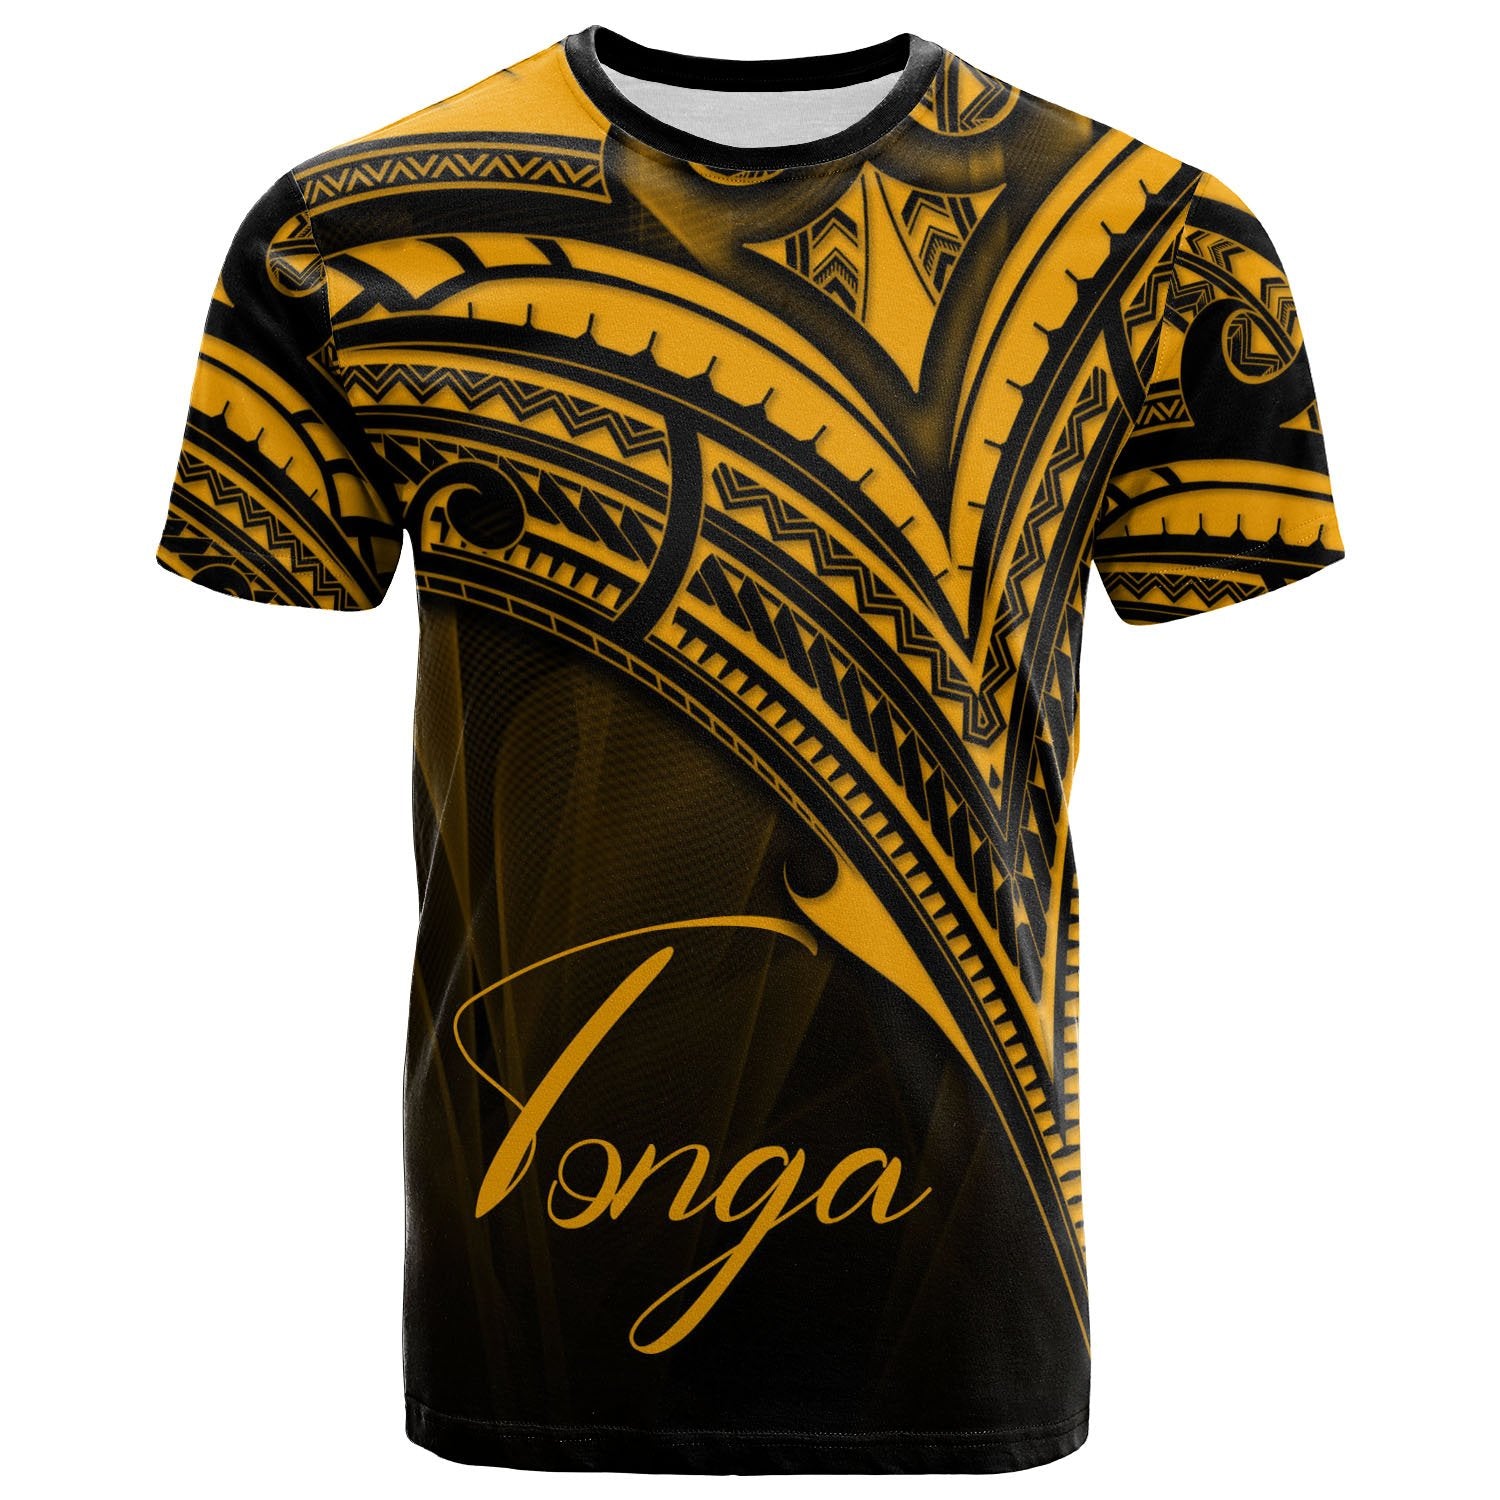 Tonga T Shirt Gold Color Cross Style Unisex Black - Polynesian Pride